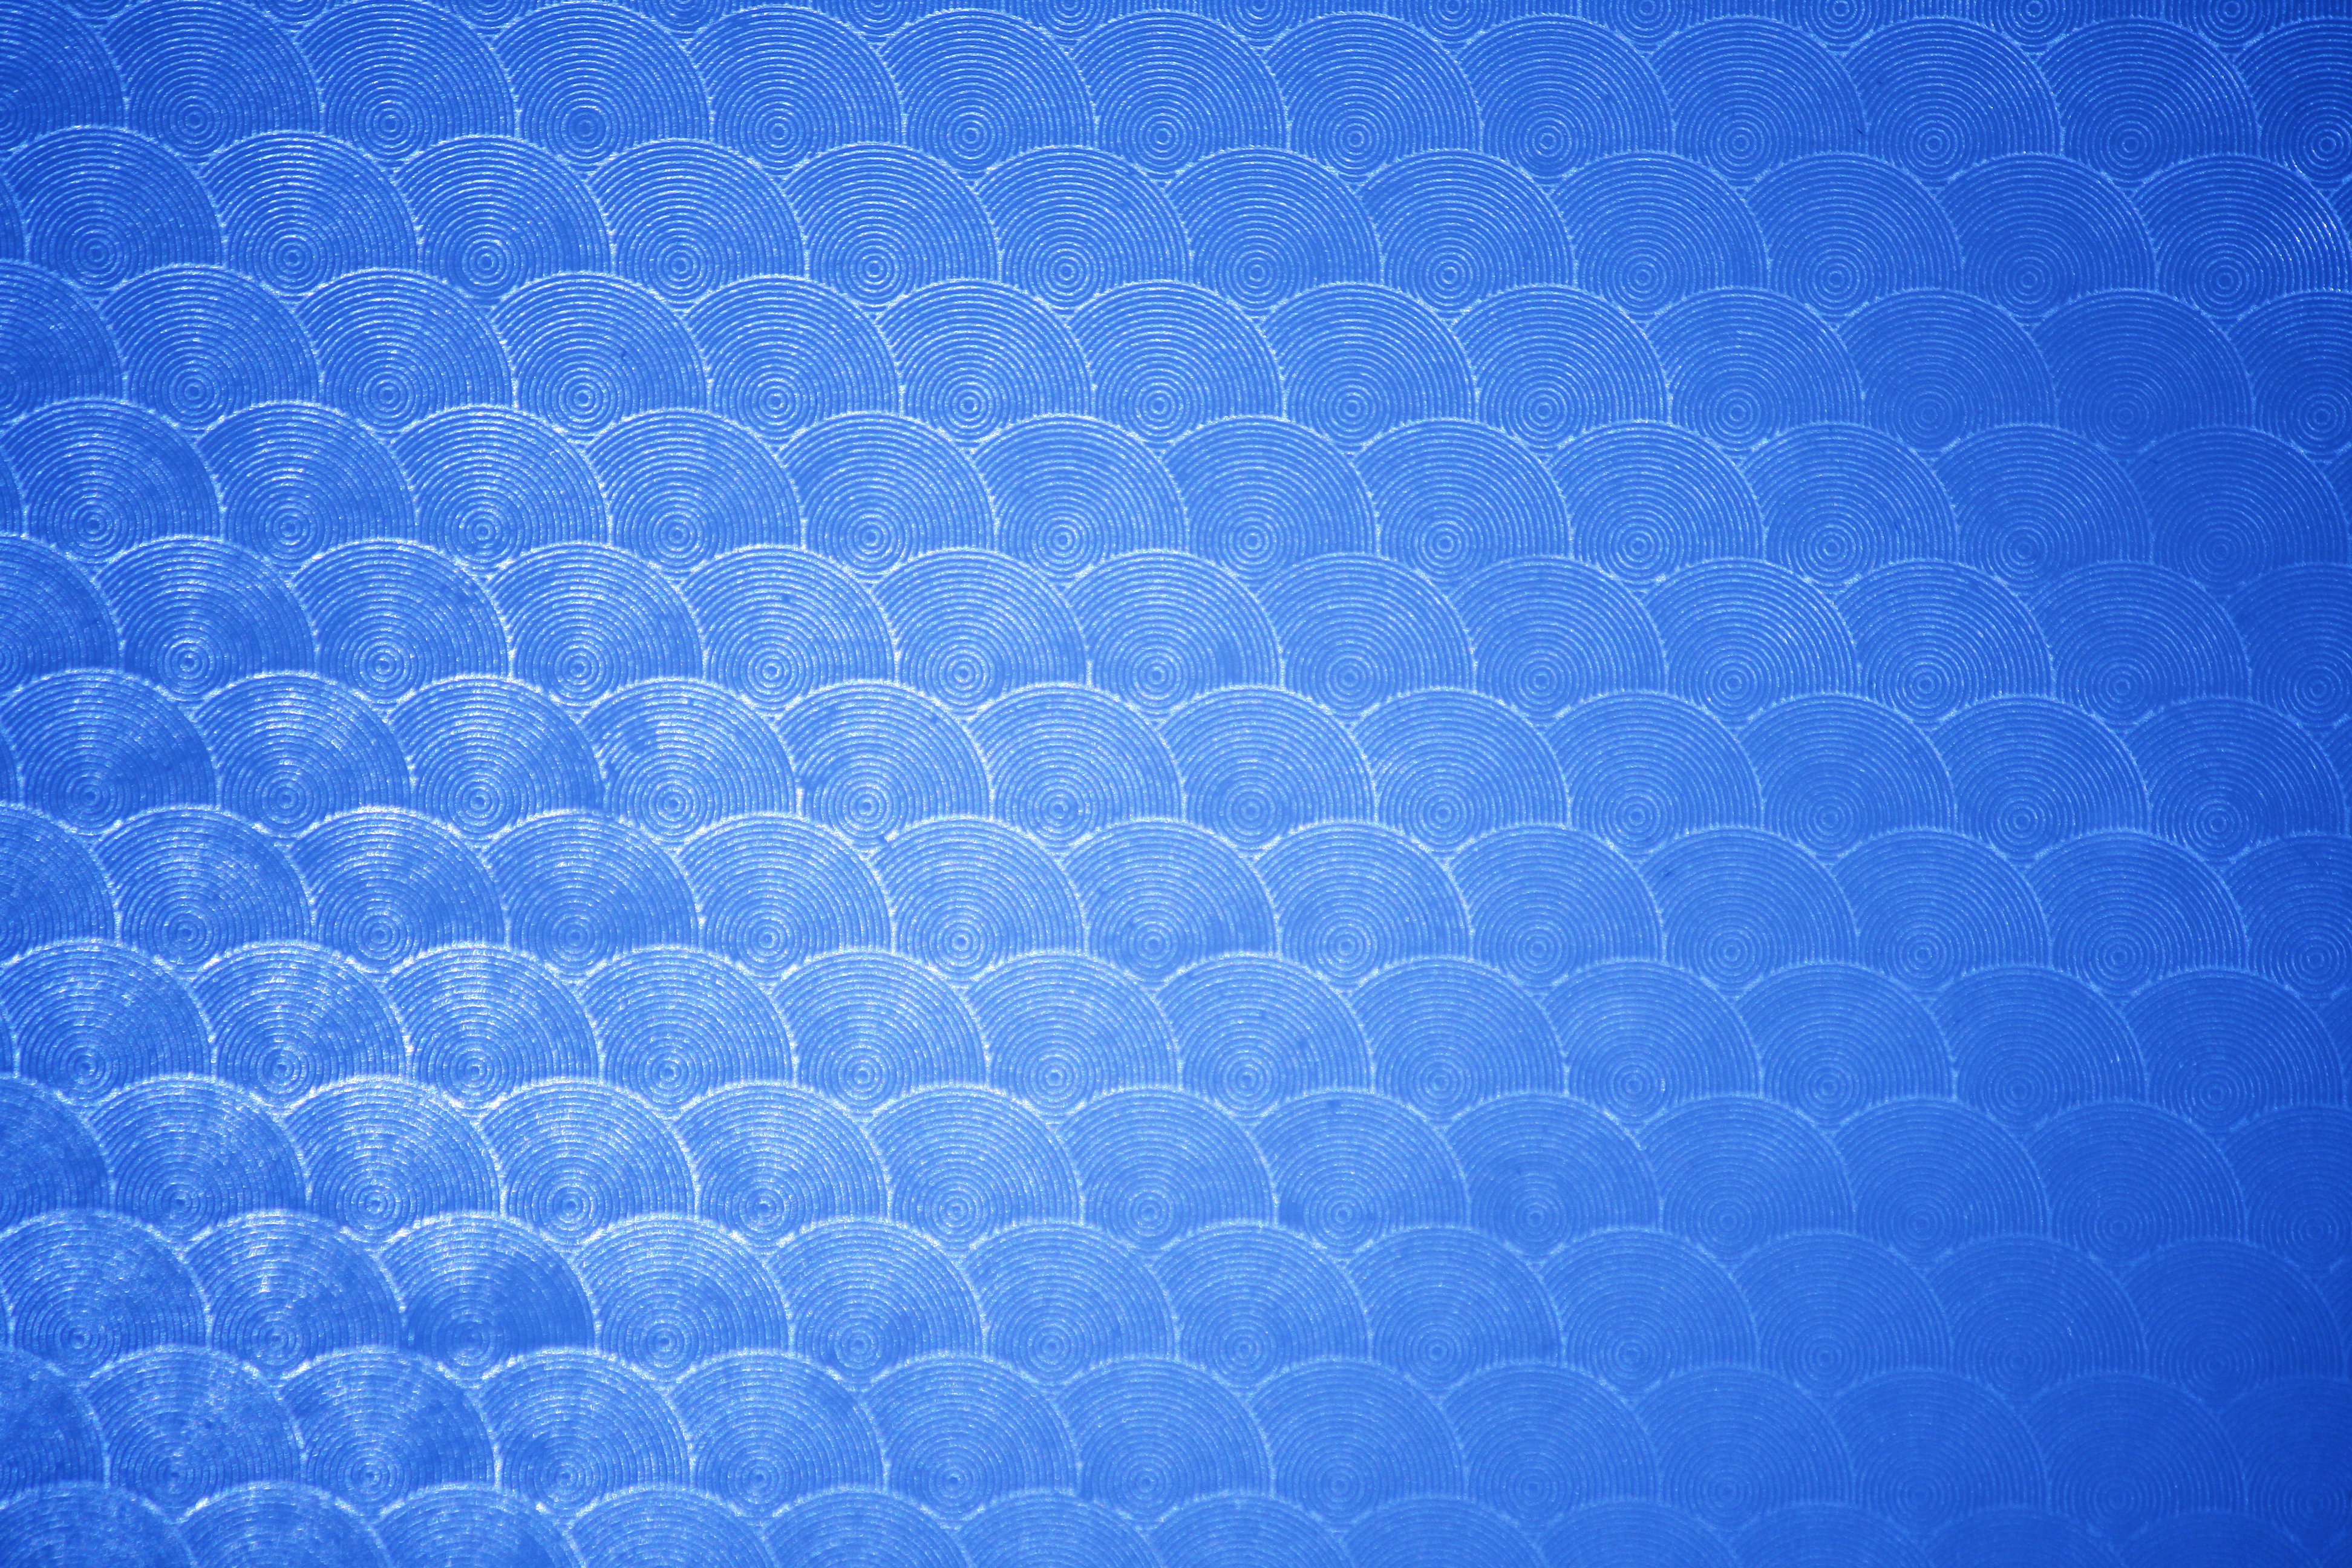 Sky Blue Circle Patterned Plastic Texture Picture | Free Photograph |  Photos Public Domain